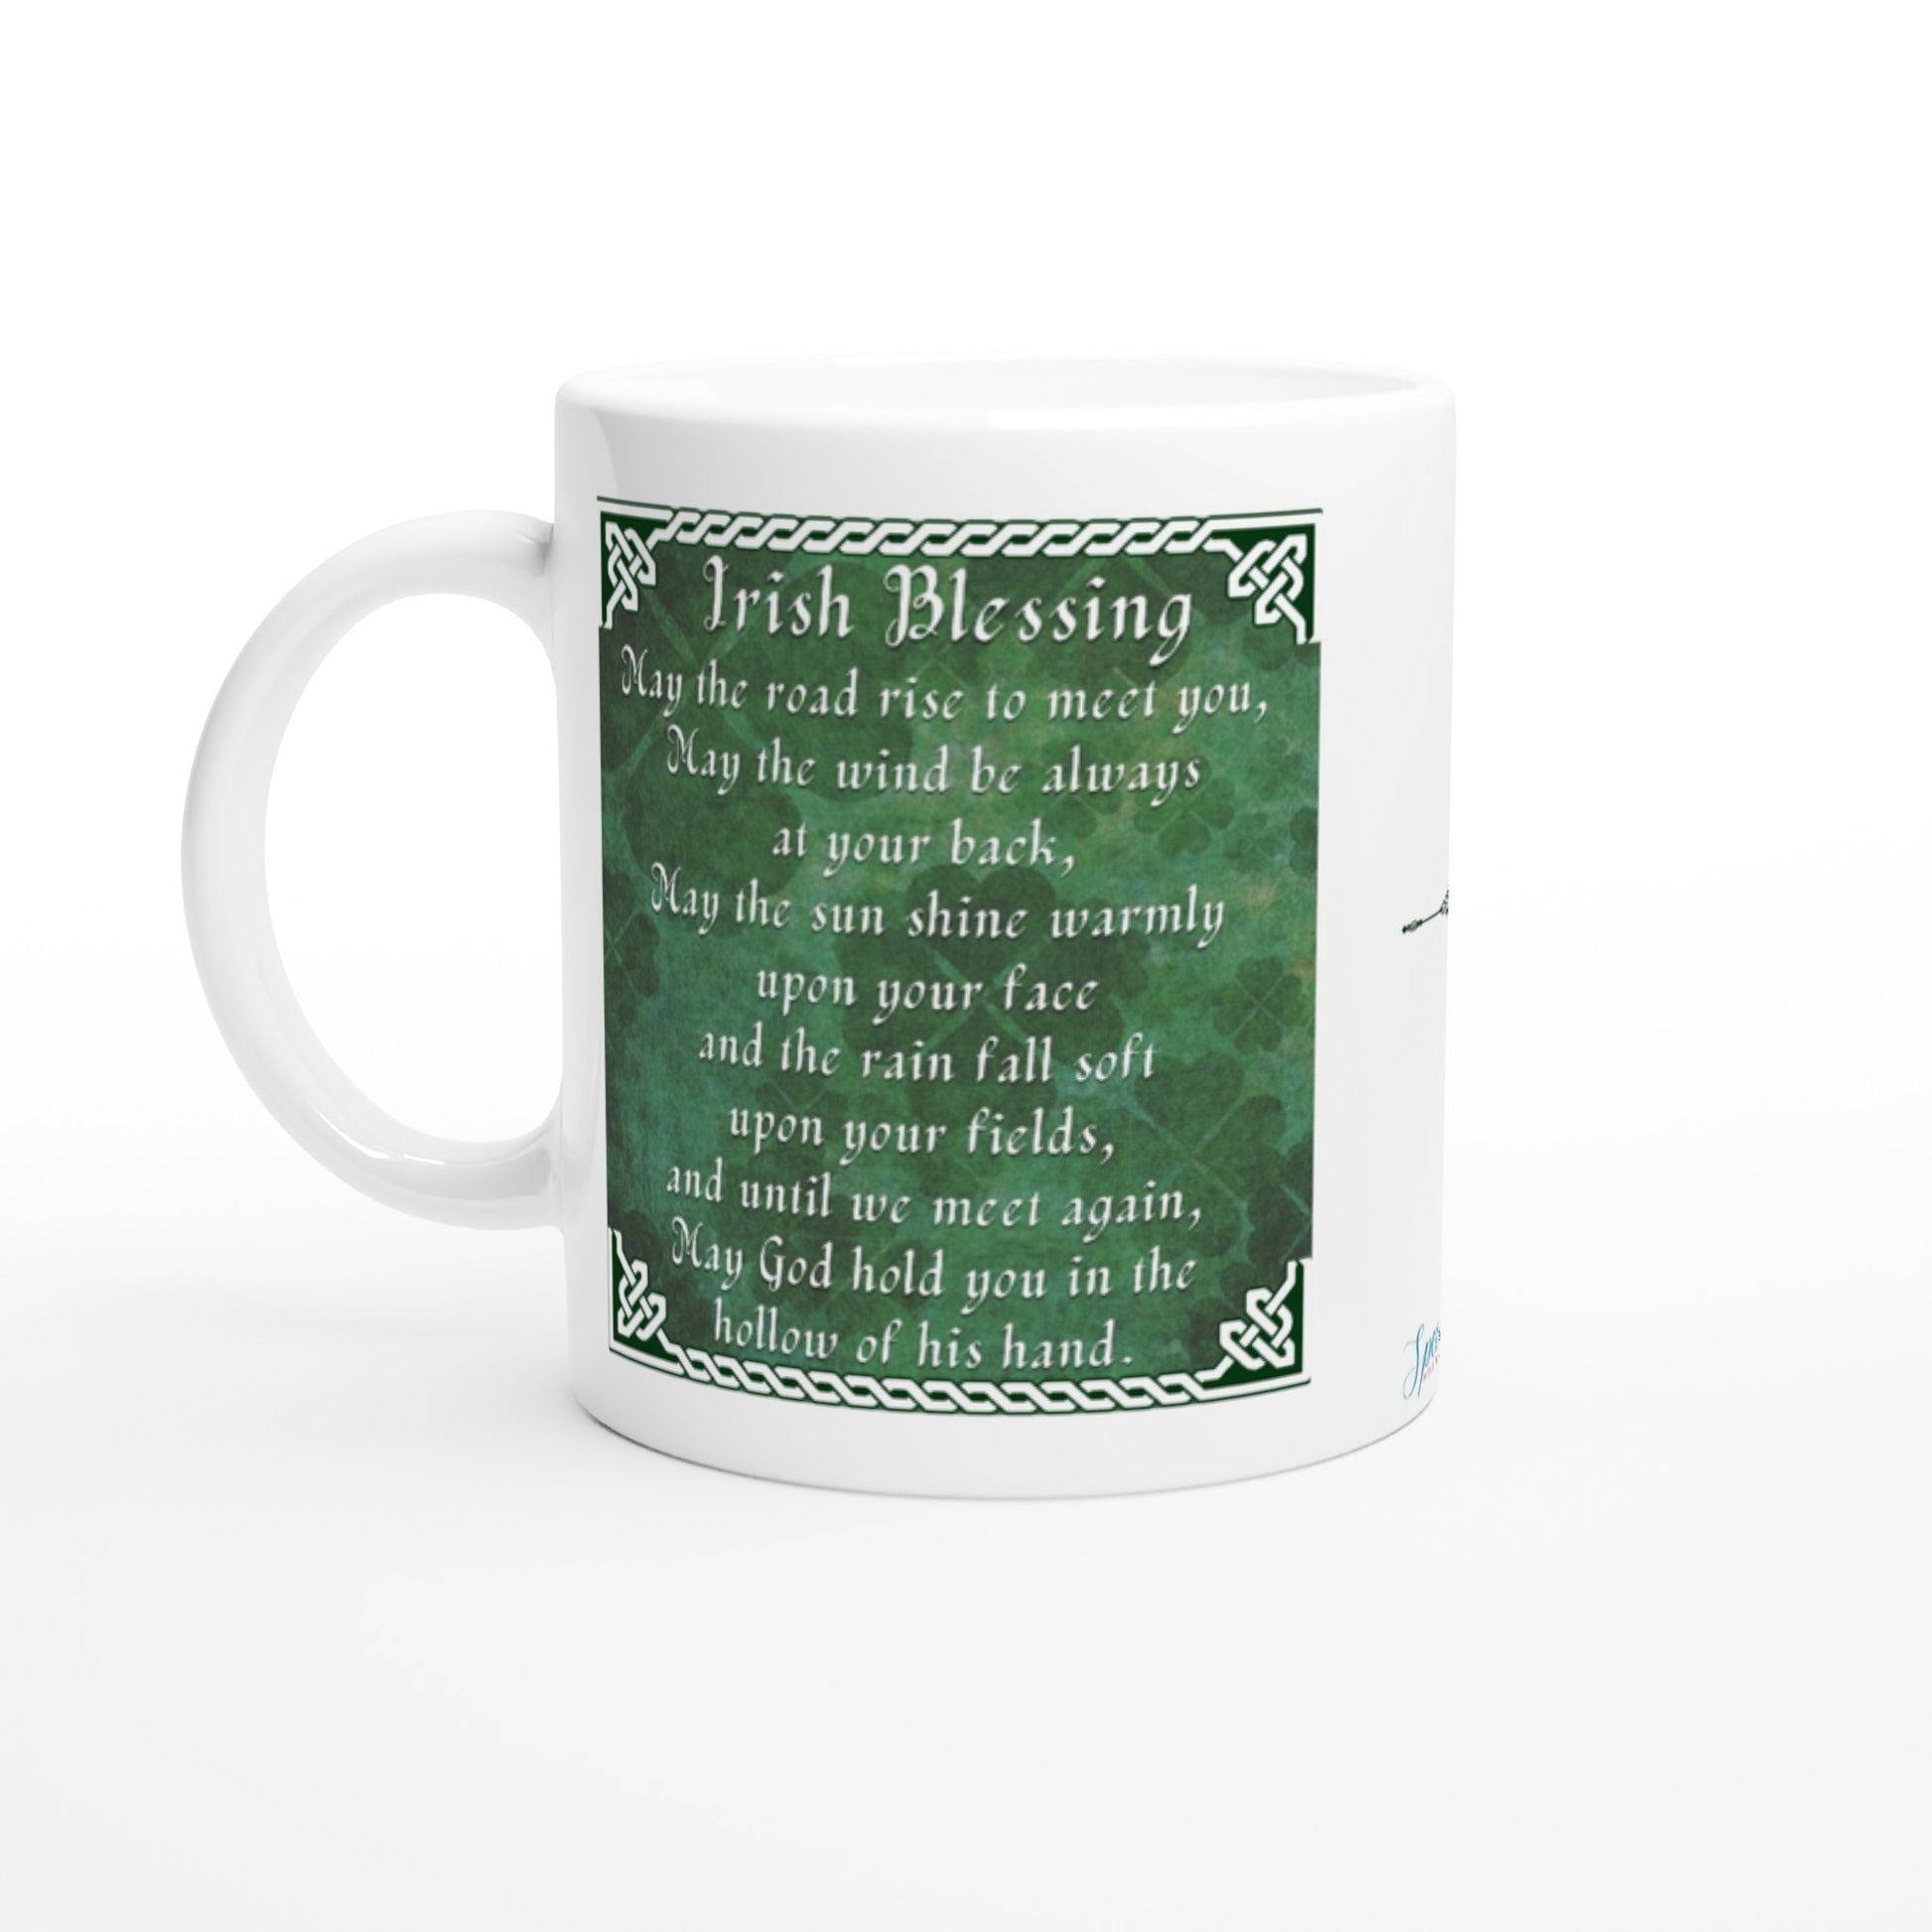 "Irish Blessing" Customizable Photo 11 oz. Mug front view